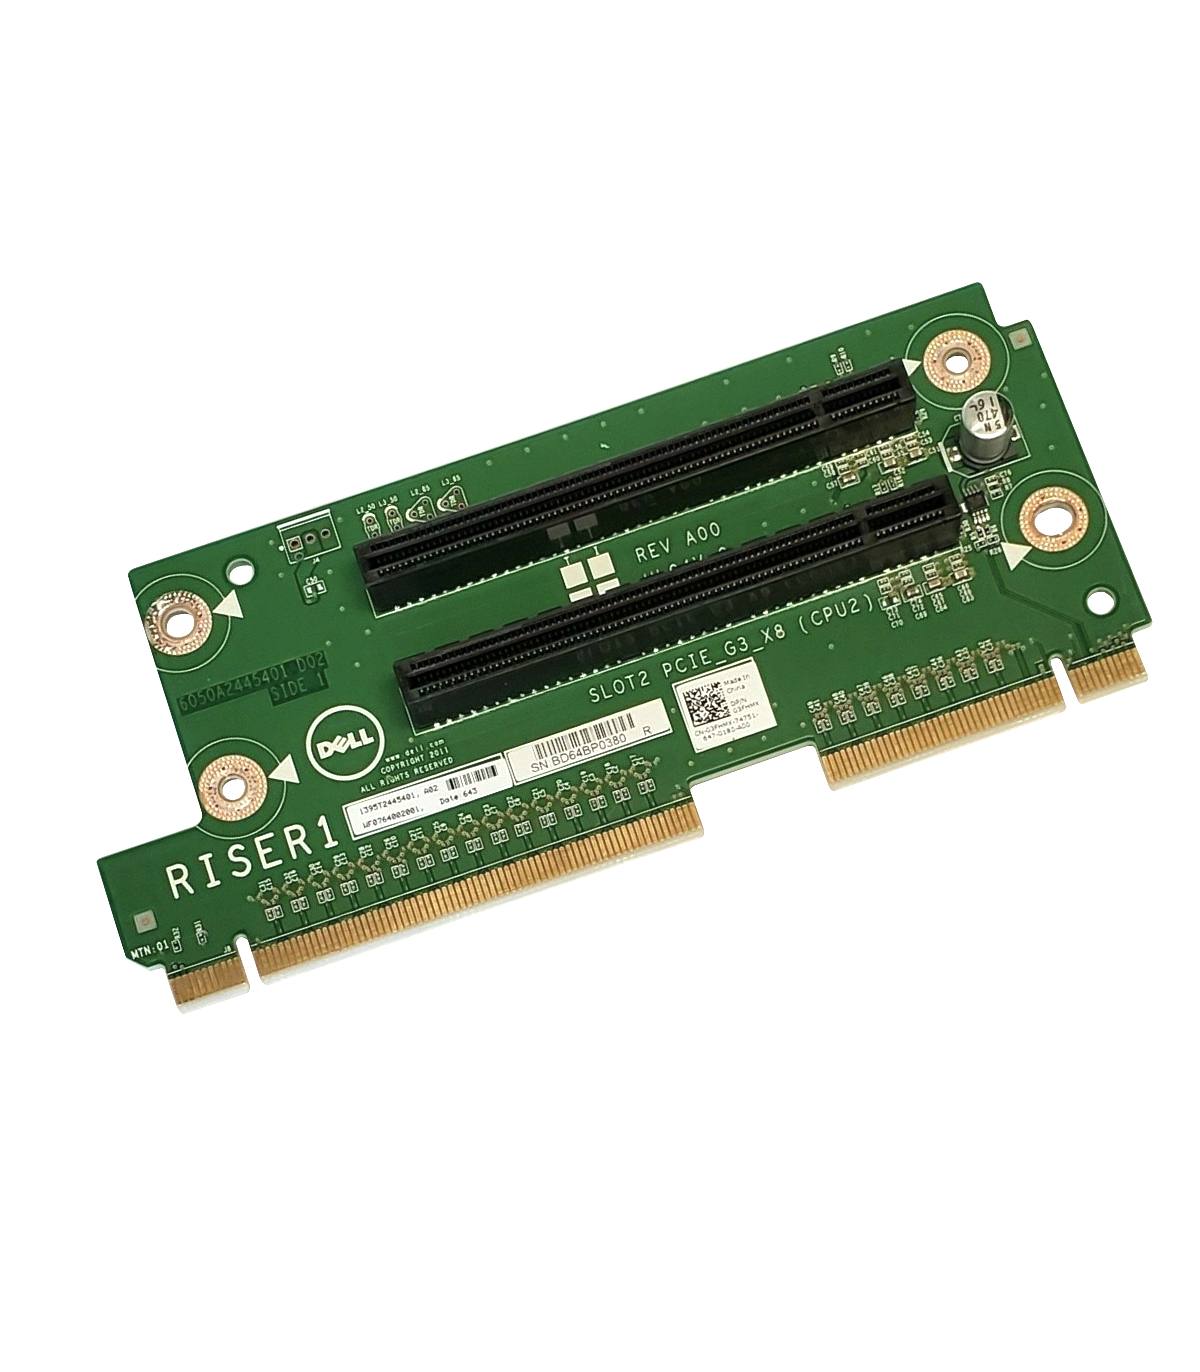 DELL R820 RISER1 ( SLOT1 X16 CPU2, SLOT2 X8 CPU2 ) 03FHMX